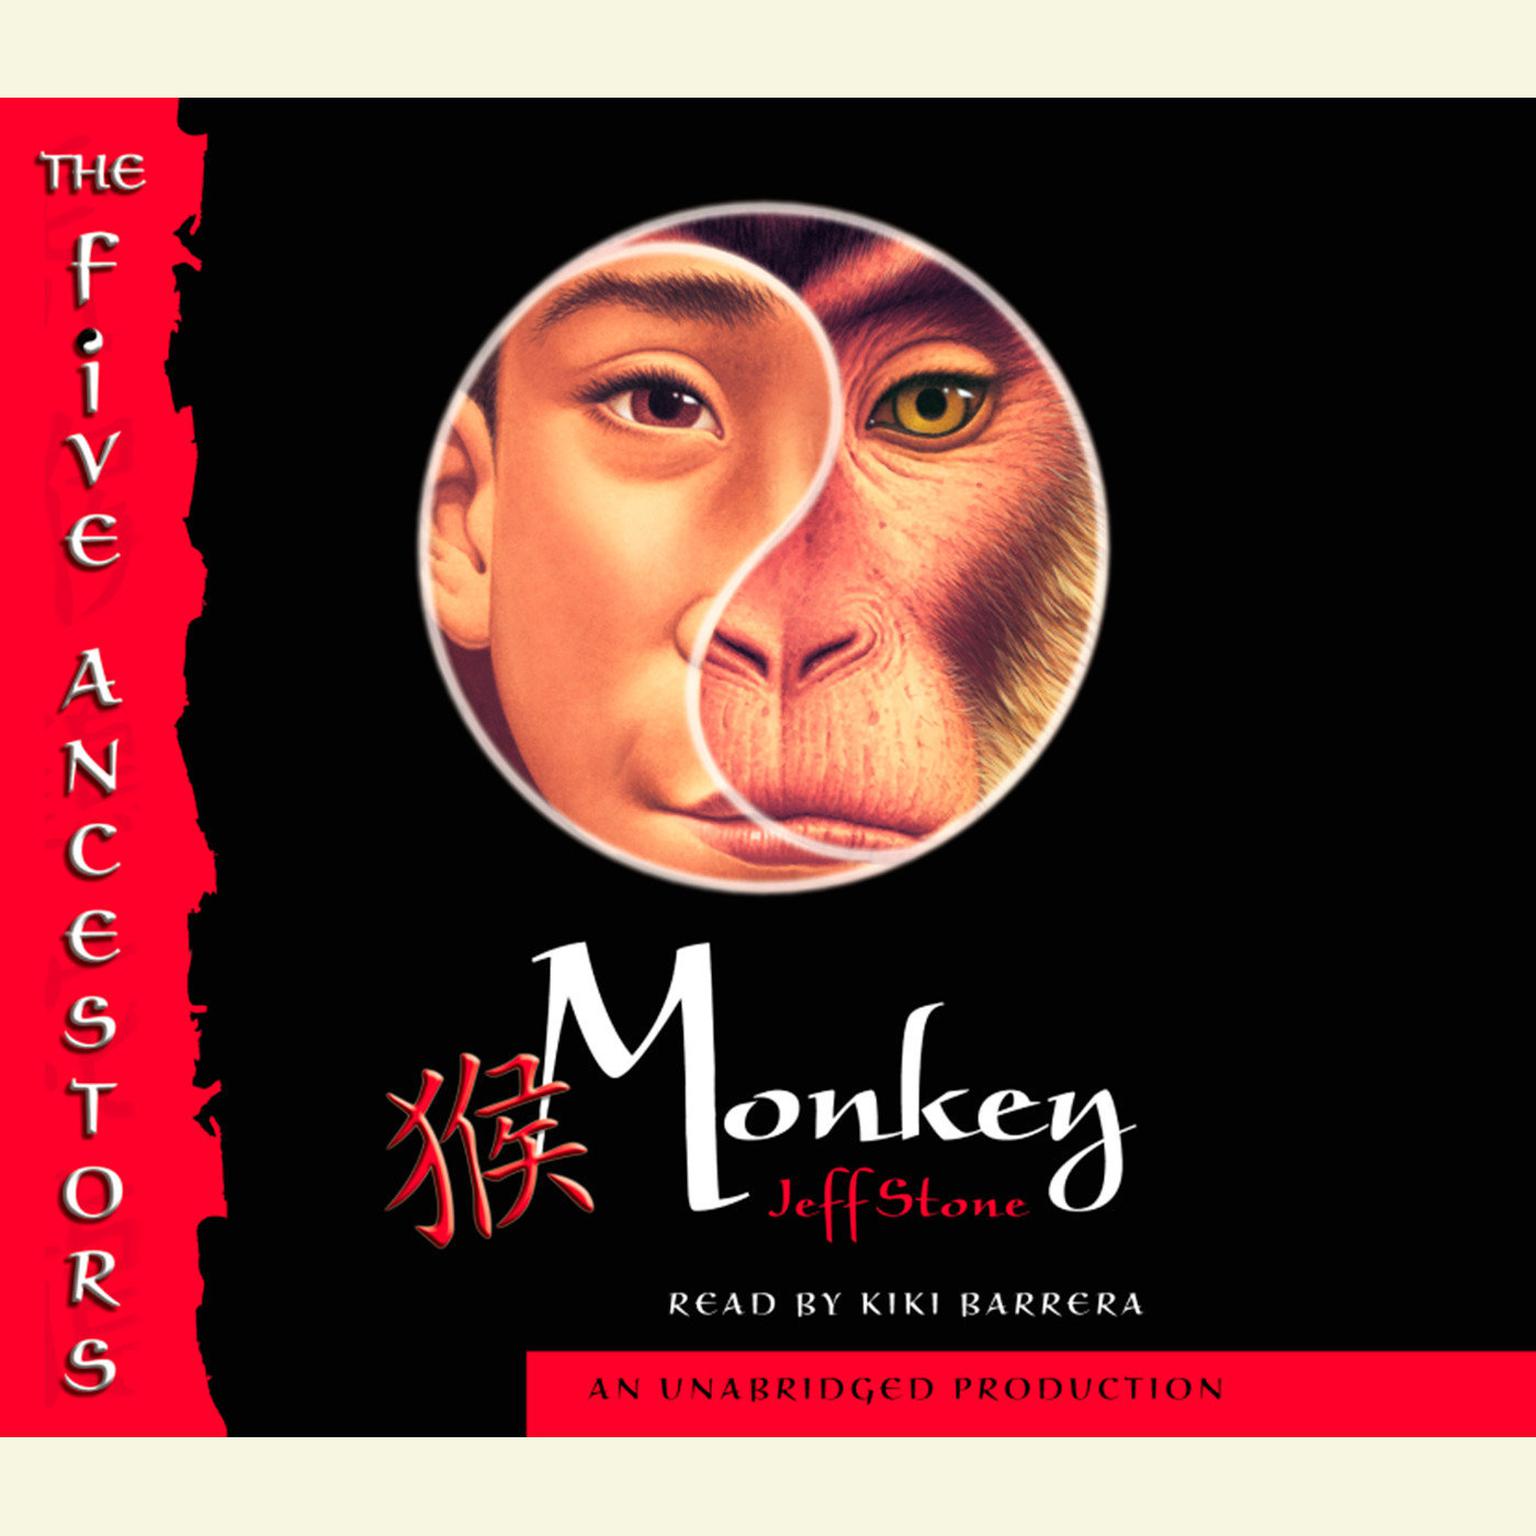 The Five Ancestors Book 2: Monkey Audiobook, by Jeff Stone